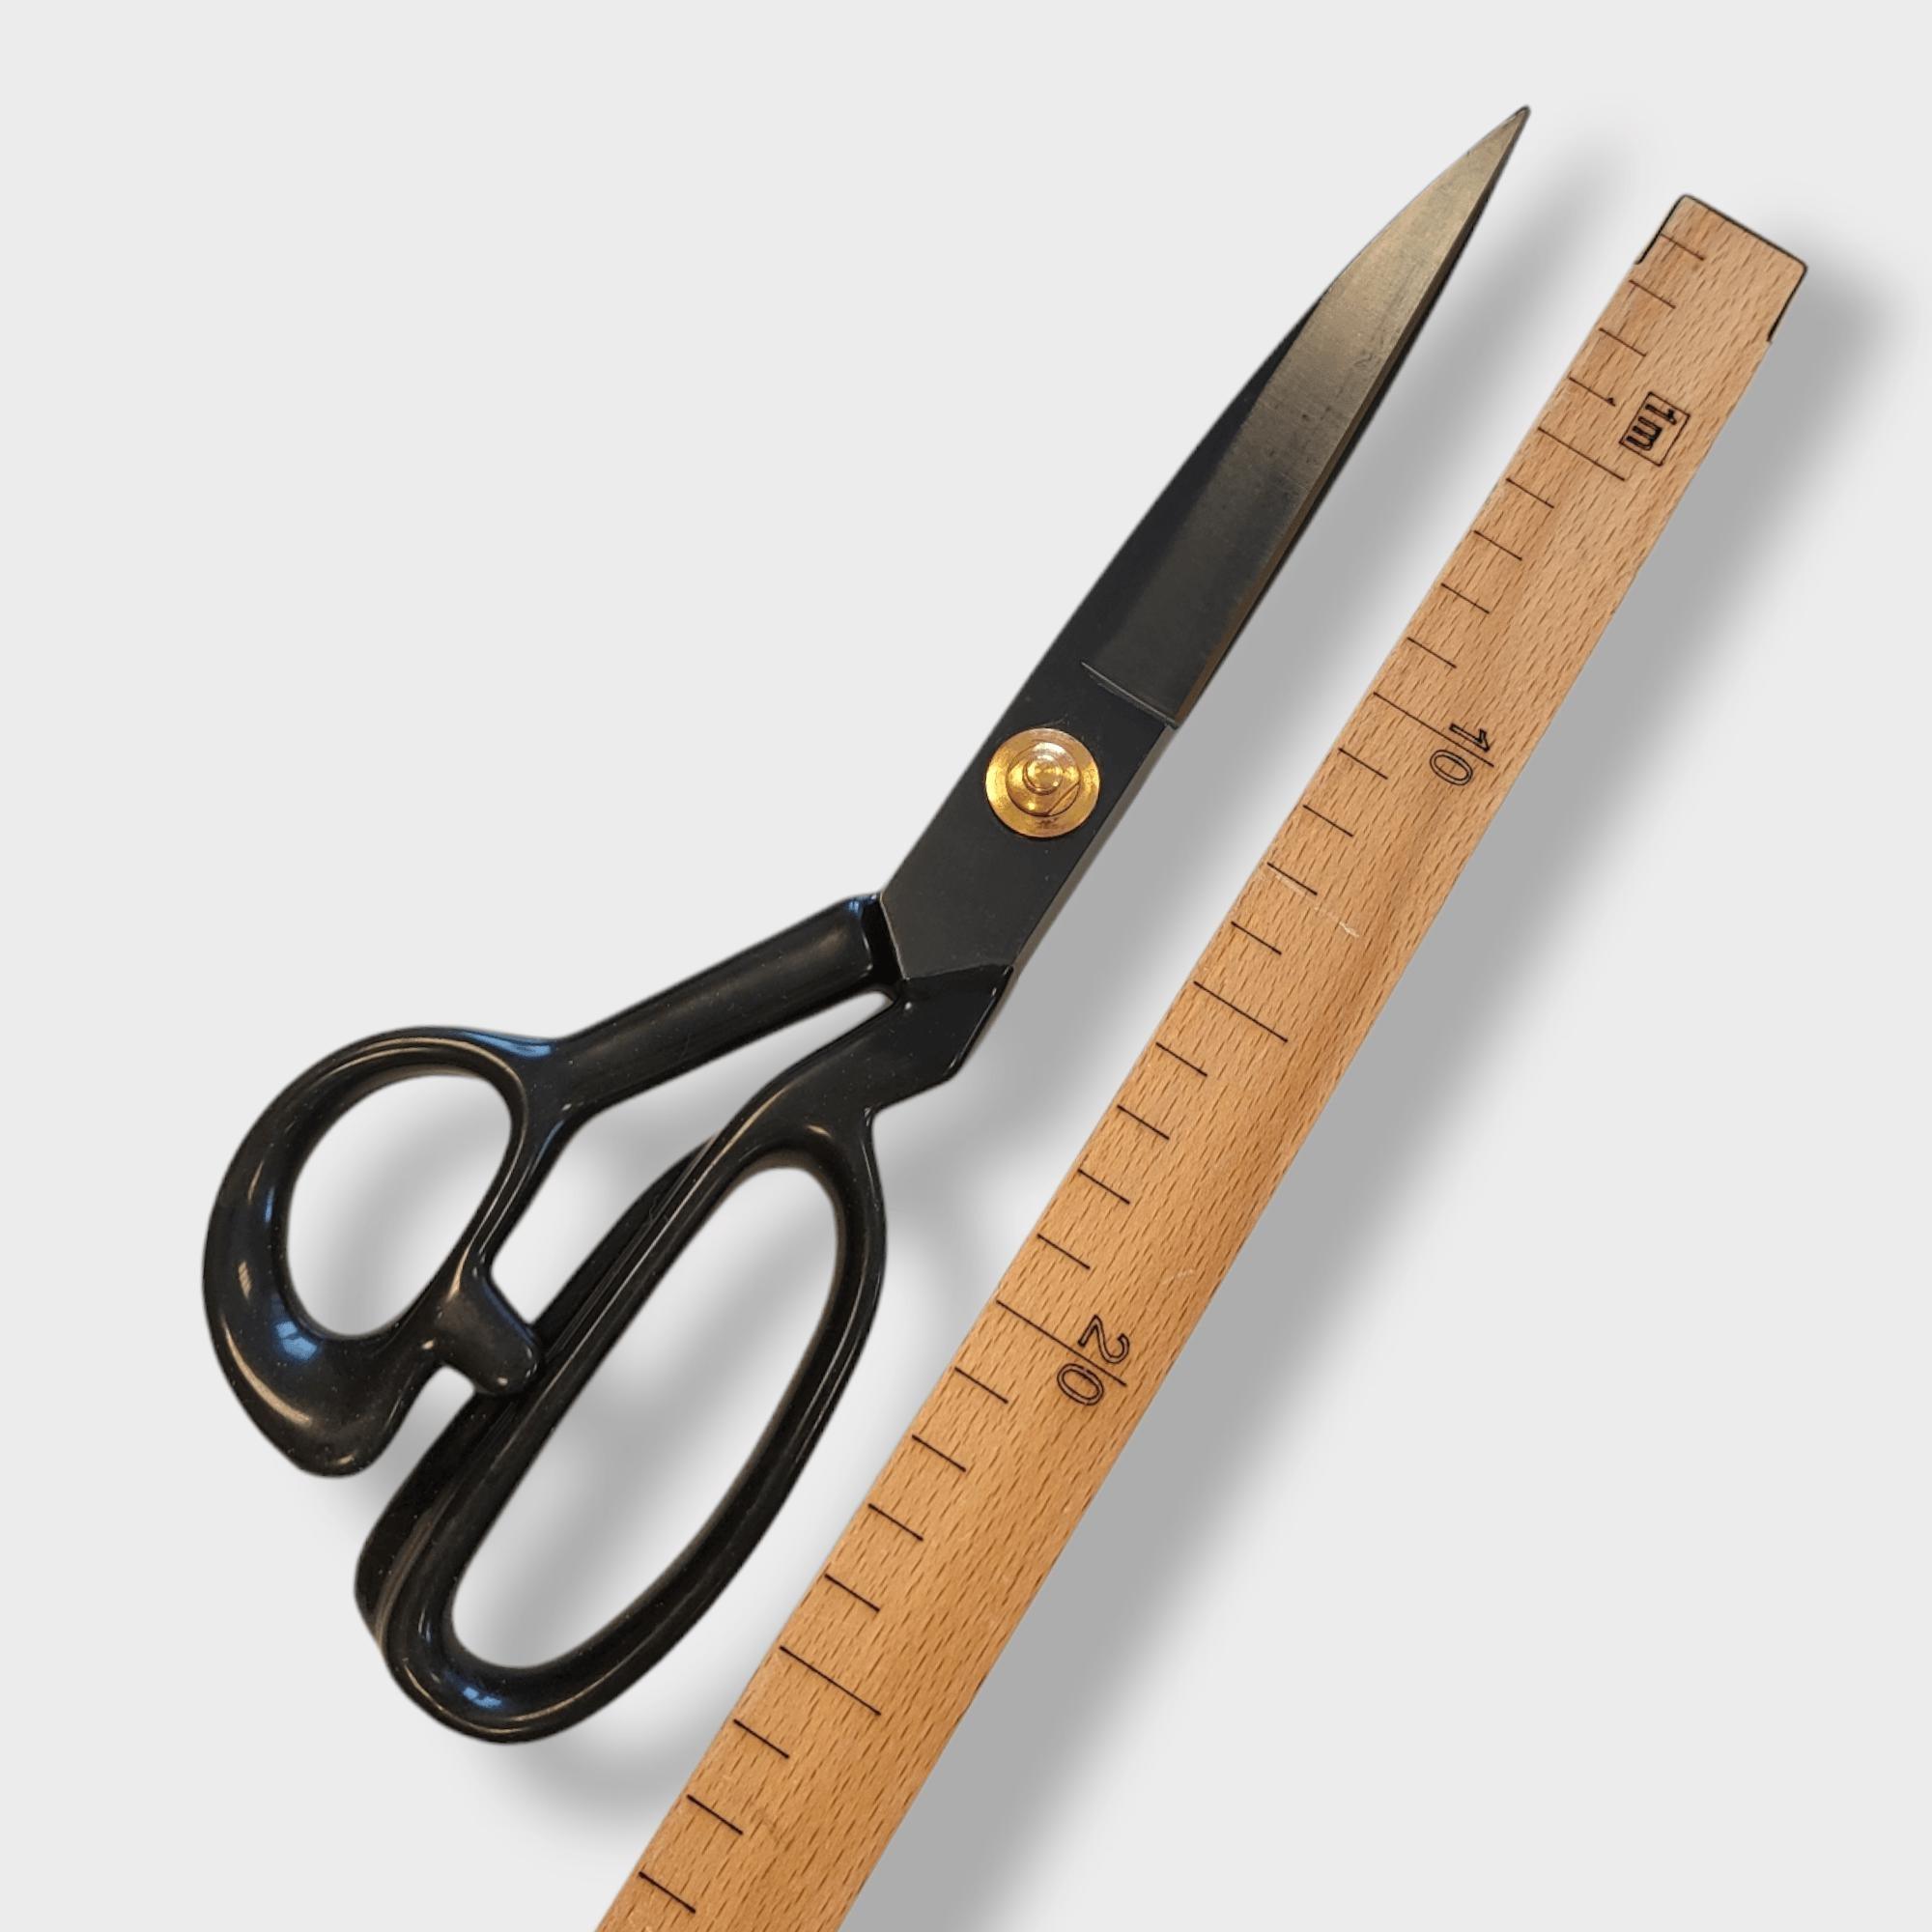 Heavy duty fabric scissors 11 inch